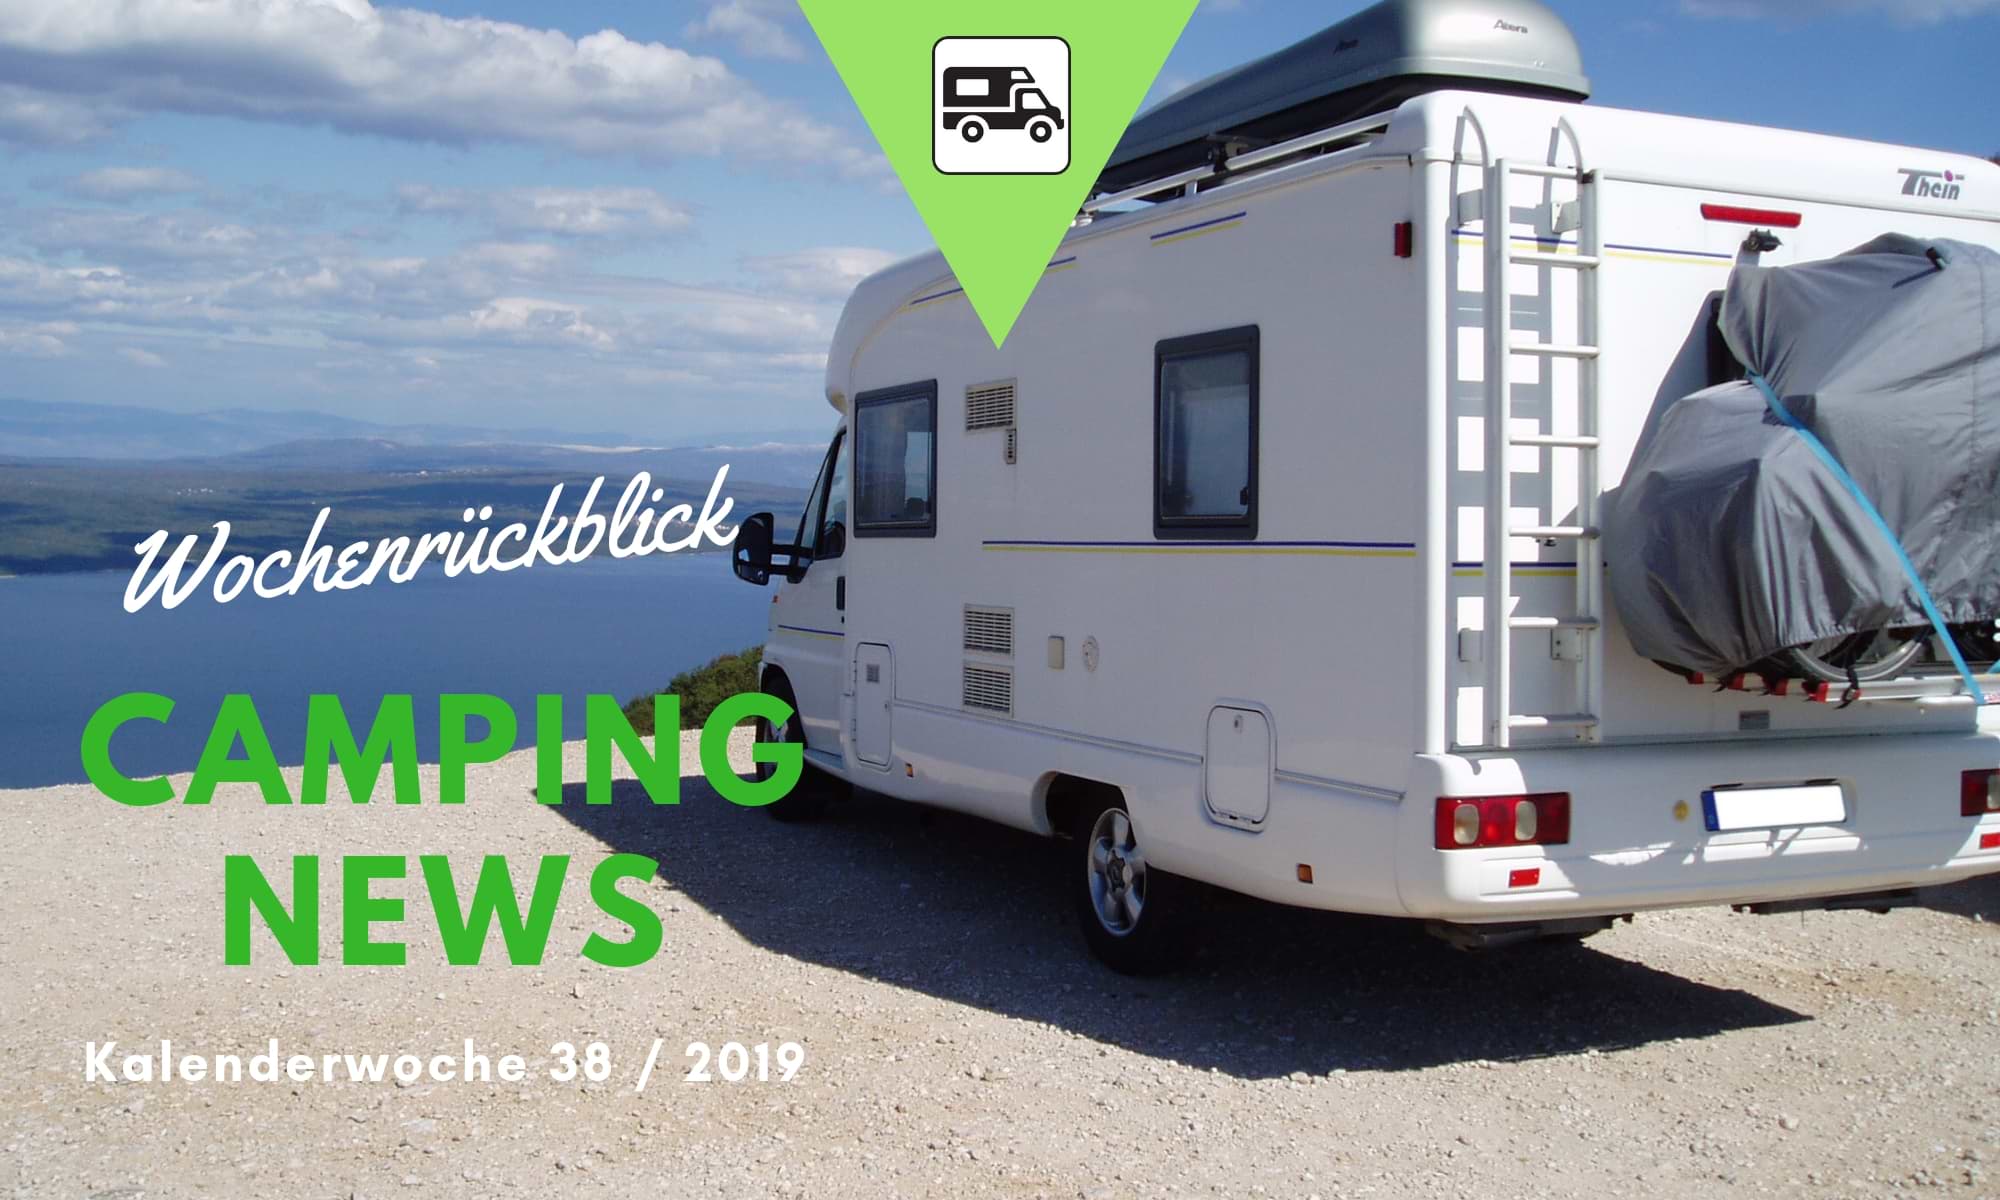 Wochenrückblick Camping News KW38-2019